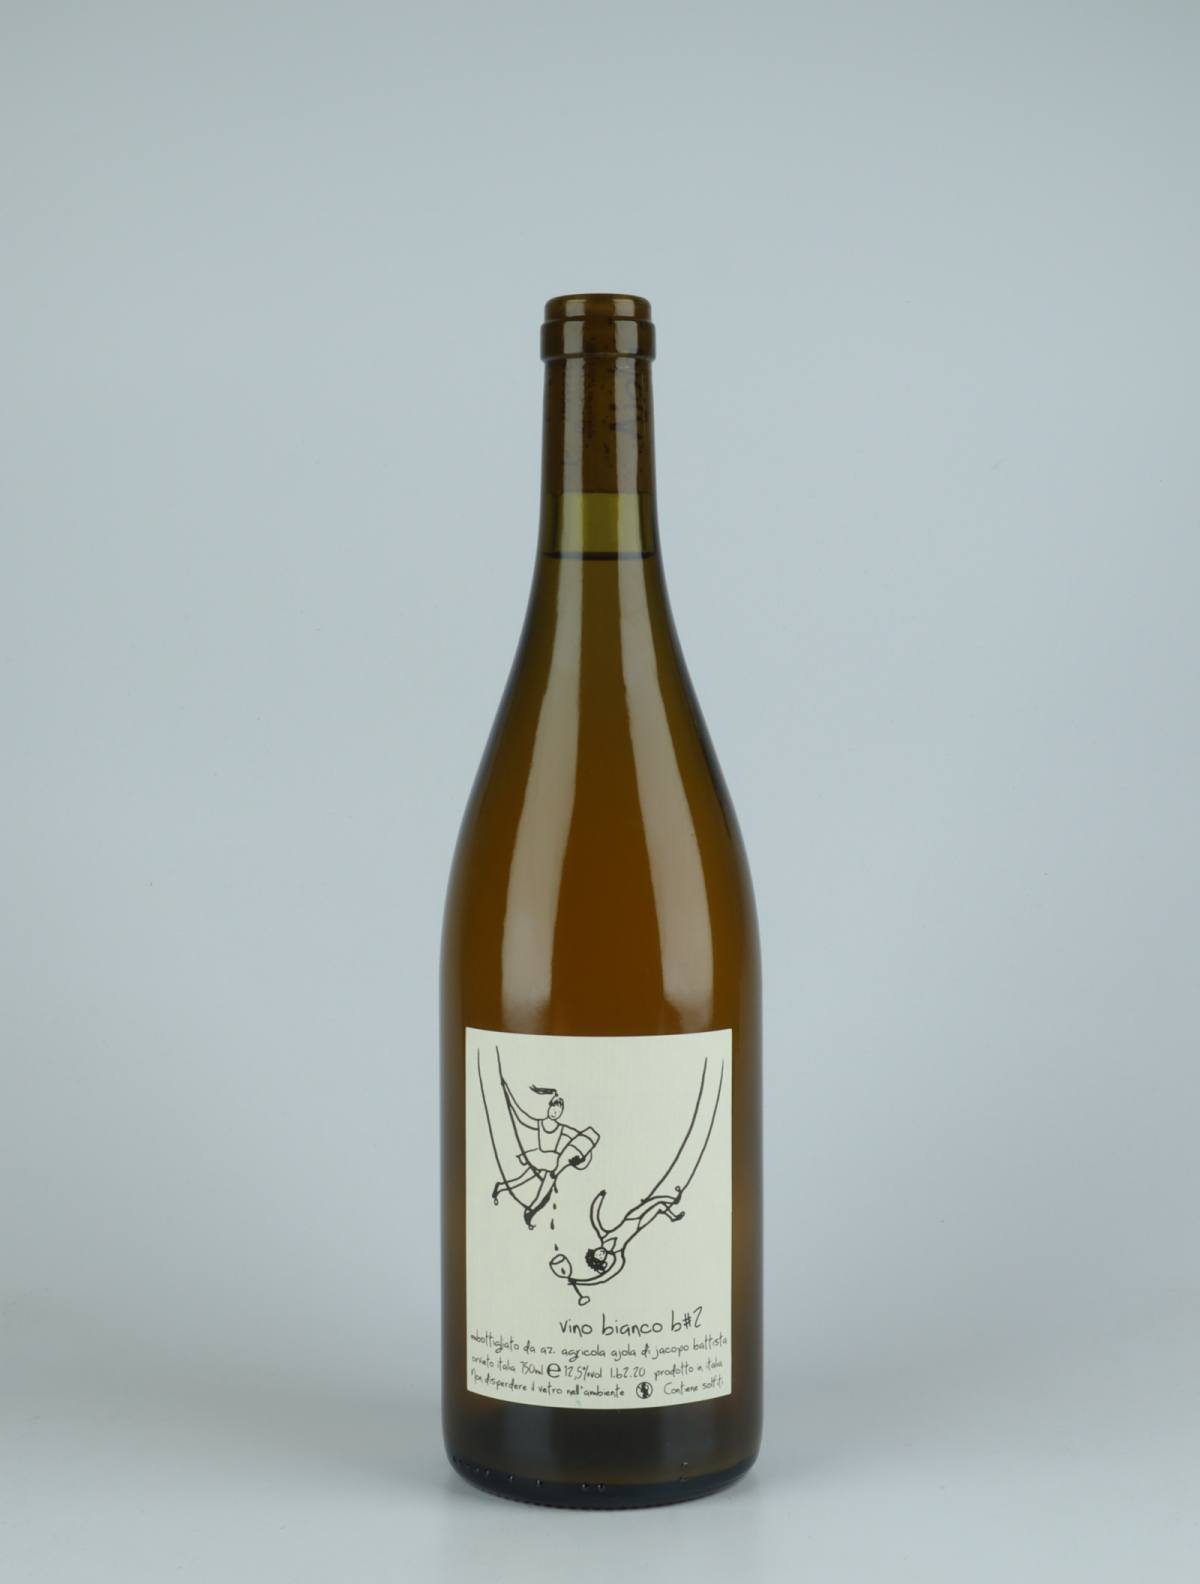 A bottle 2020 Vino Bianco #2 Orange wine from Ajola, Umbria in Italy